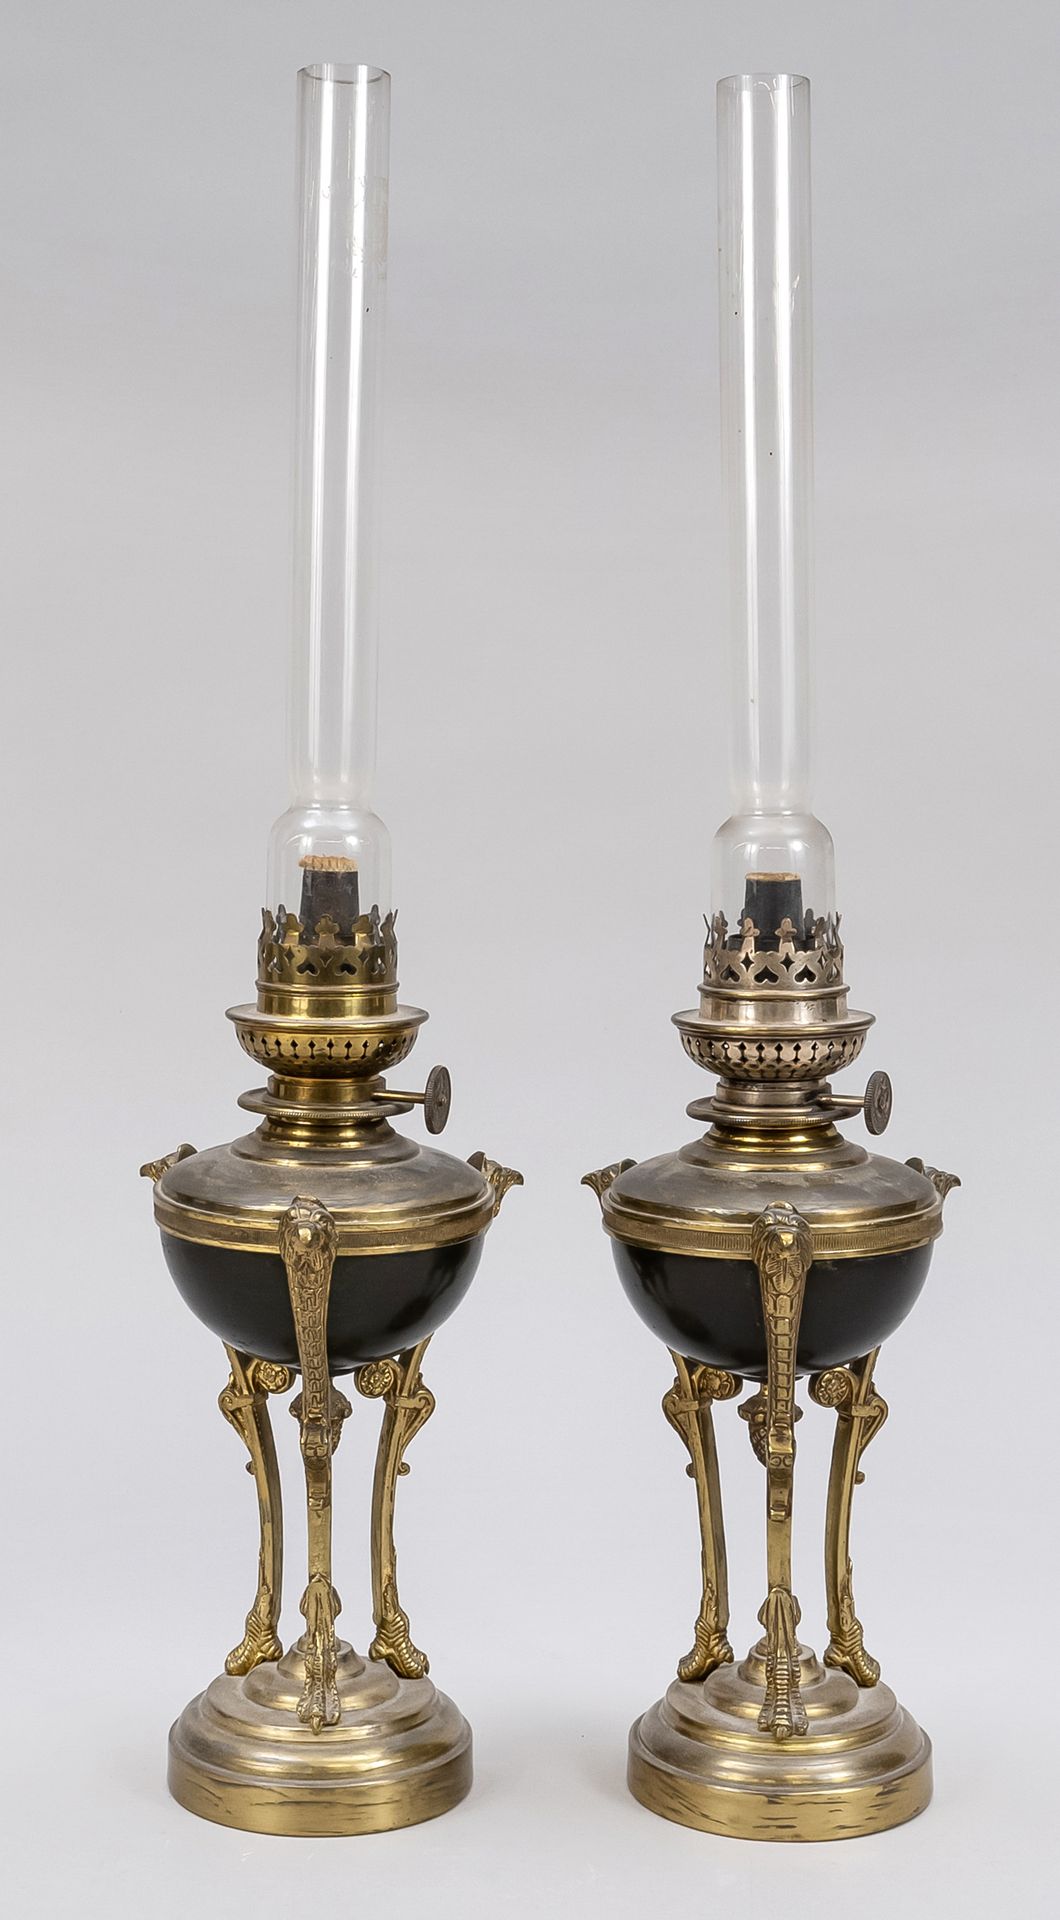 Null Paar Petroleumlampen im Empire-Stil, 19. Jh., Bronze vergoldet, Messing, Gl&hellip;